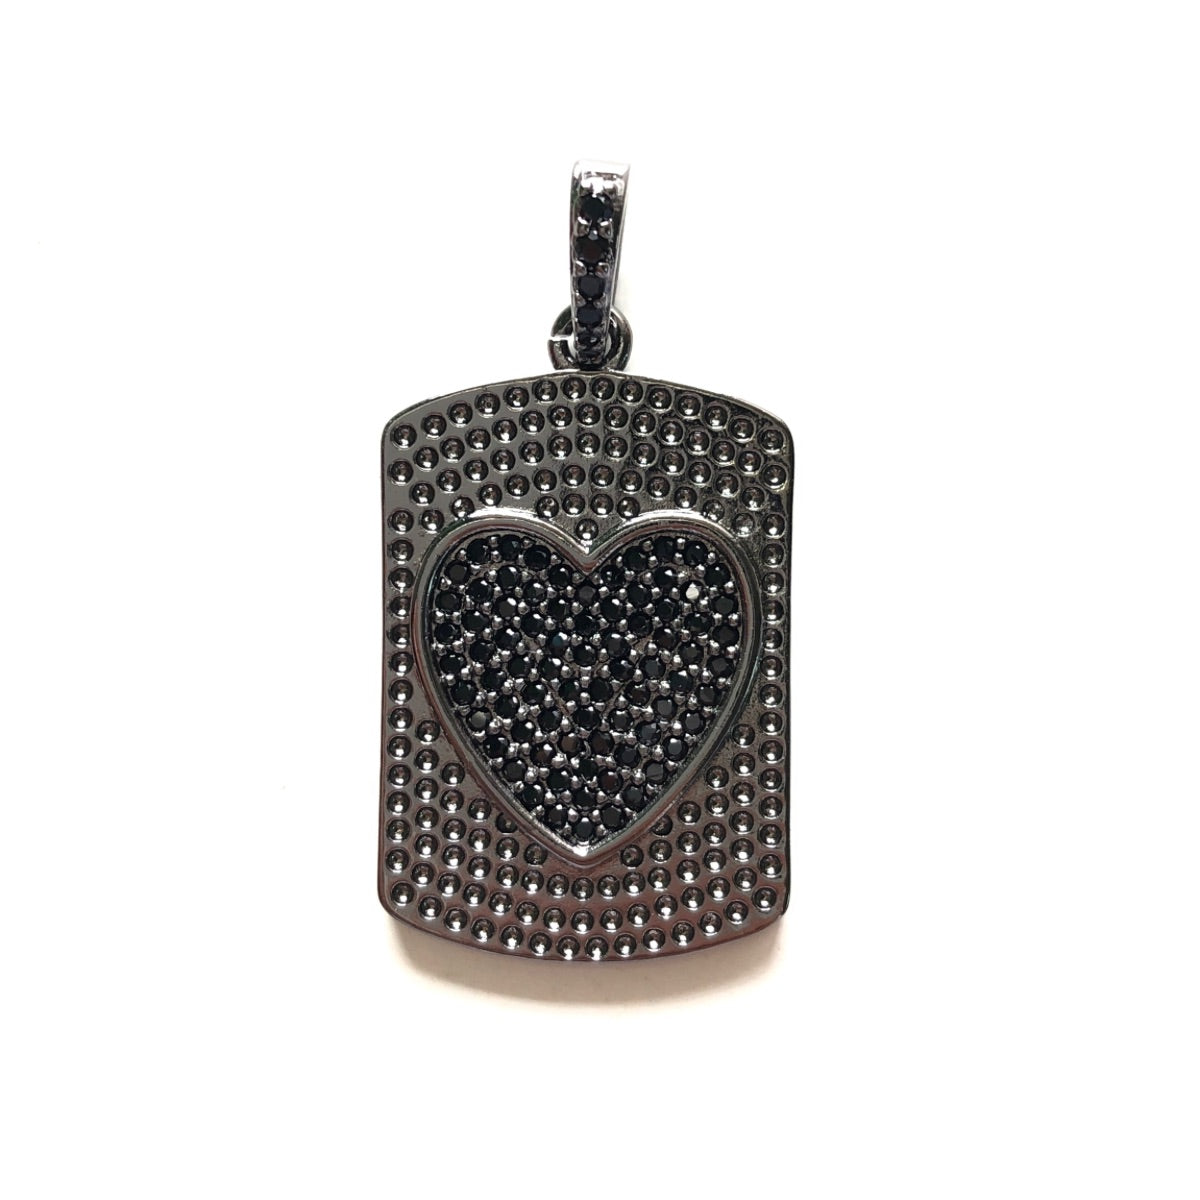 10pcs/lot 37*19mm CZ Pave Heart Rectangle Plate Charm Pendants Black on Black CZ Paved Charms Hearts On Sale Charms Beads Beyond